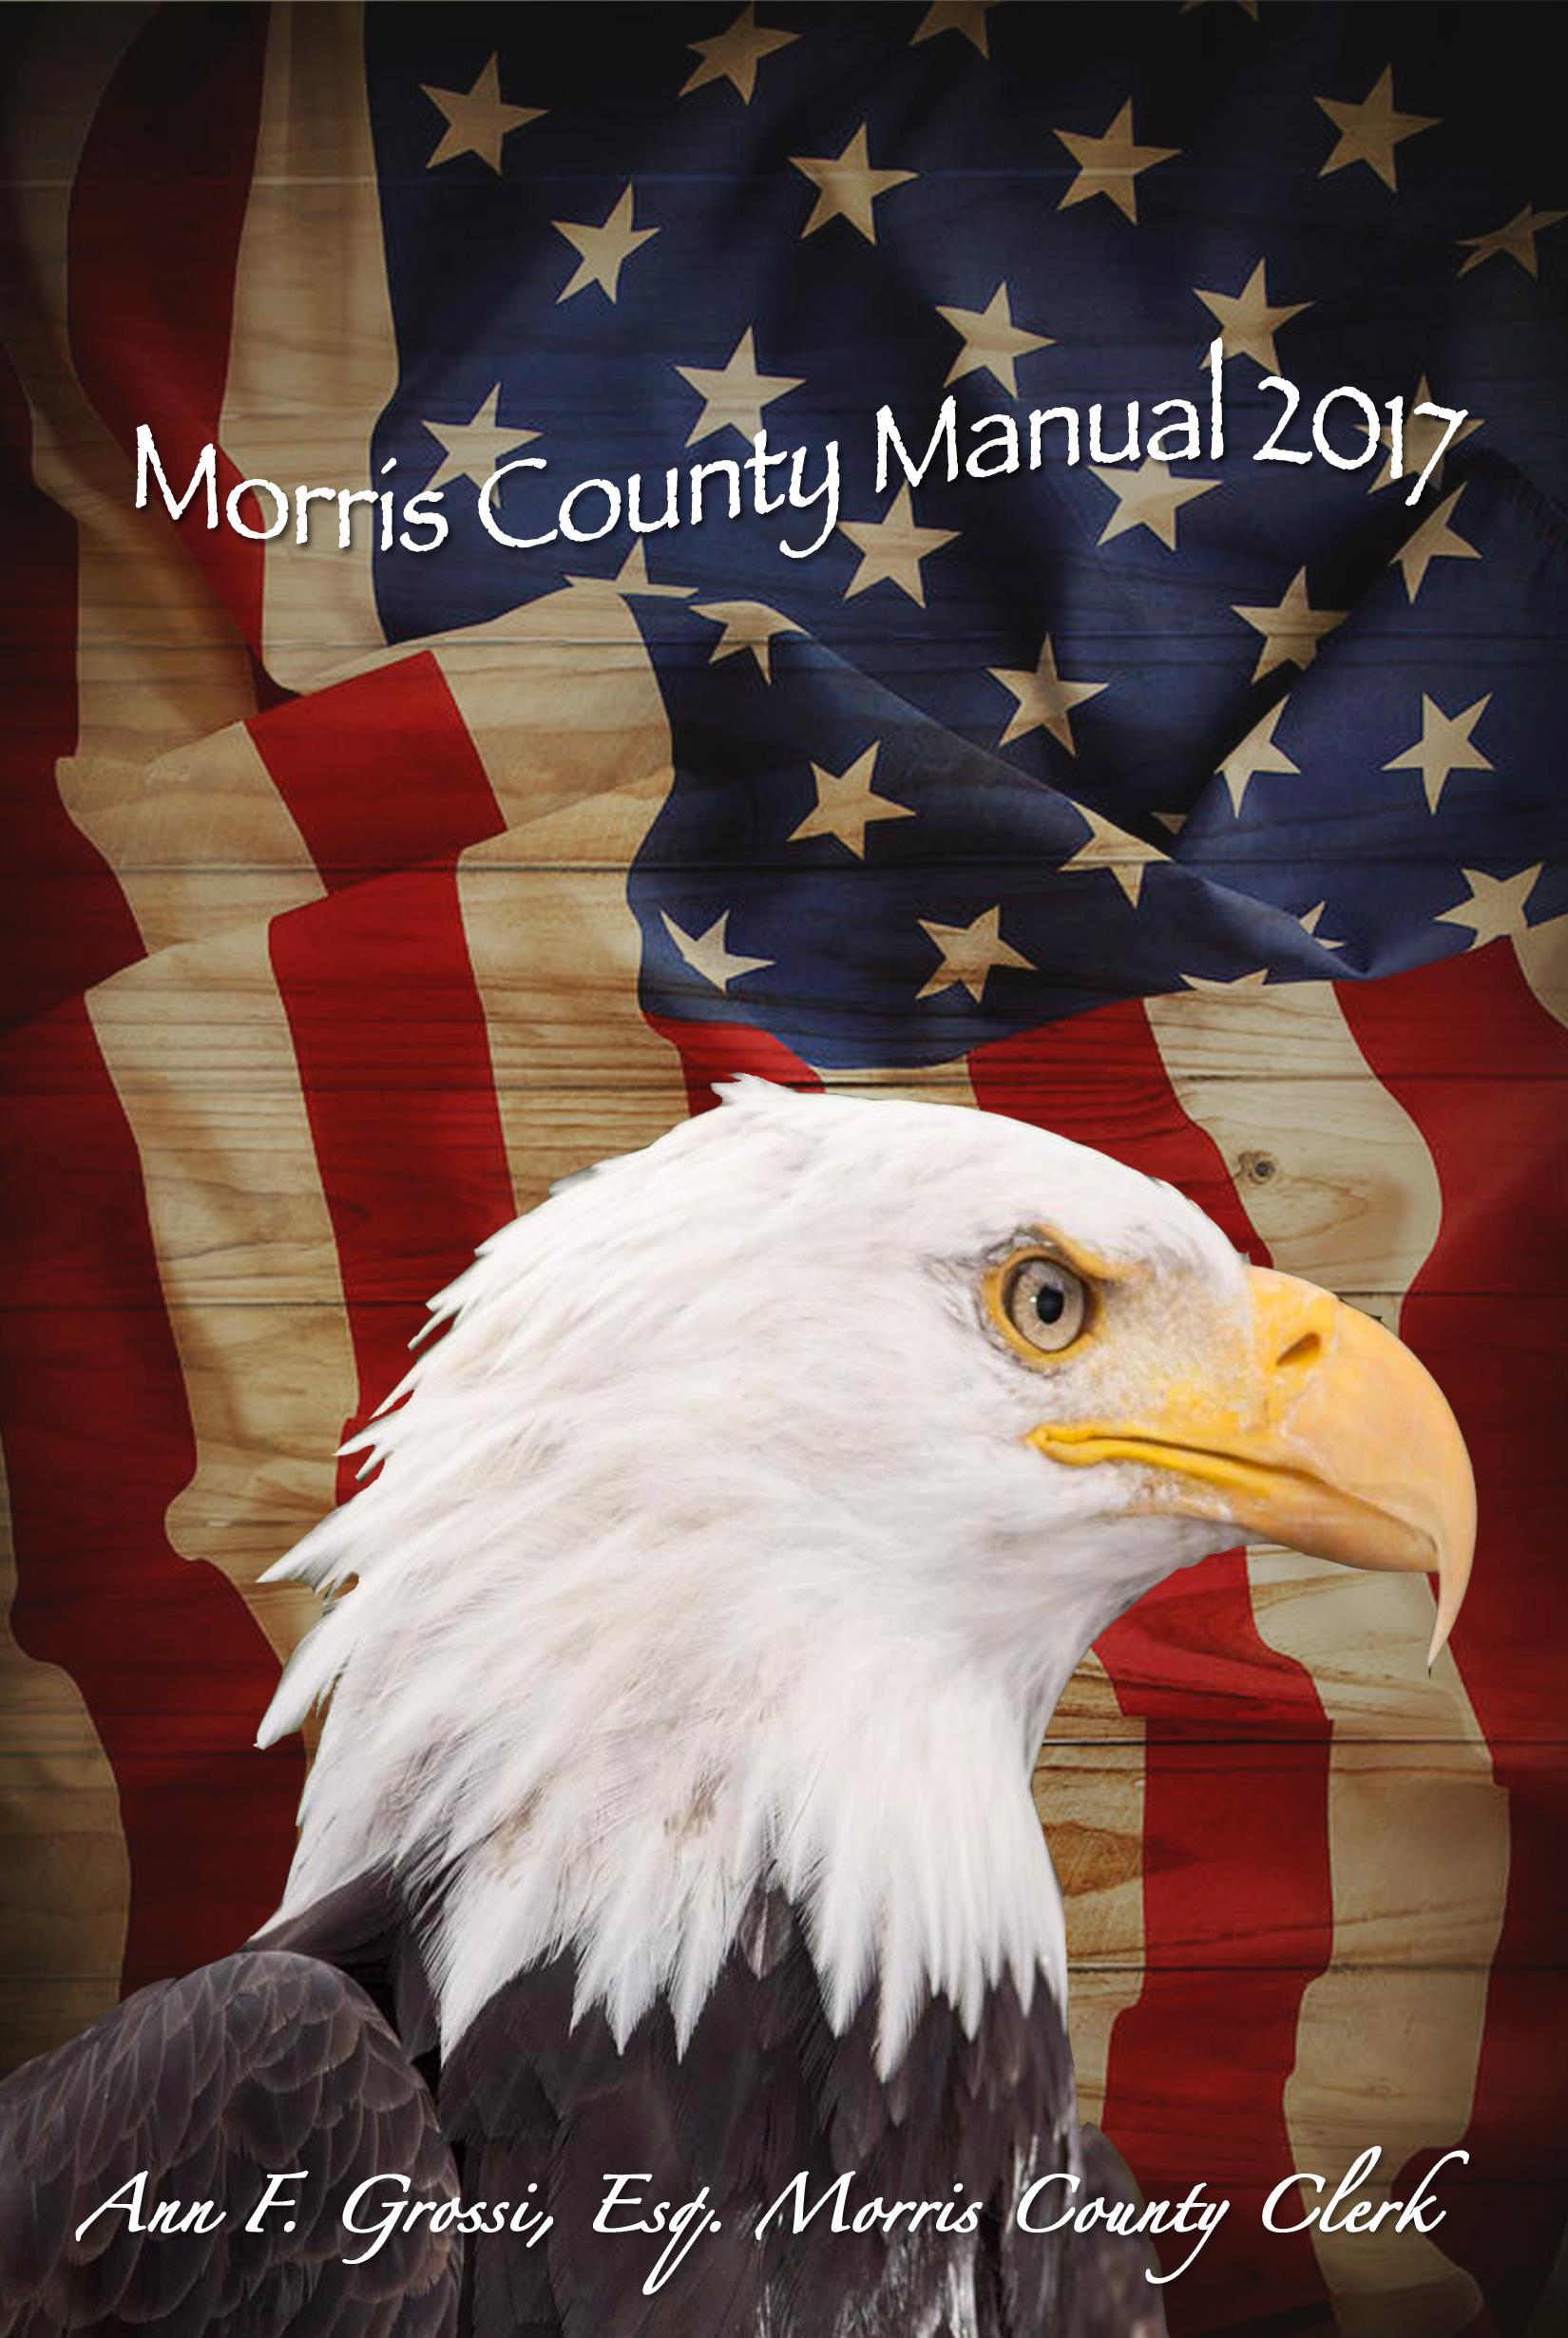 2017 Morris County Manual cover image